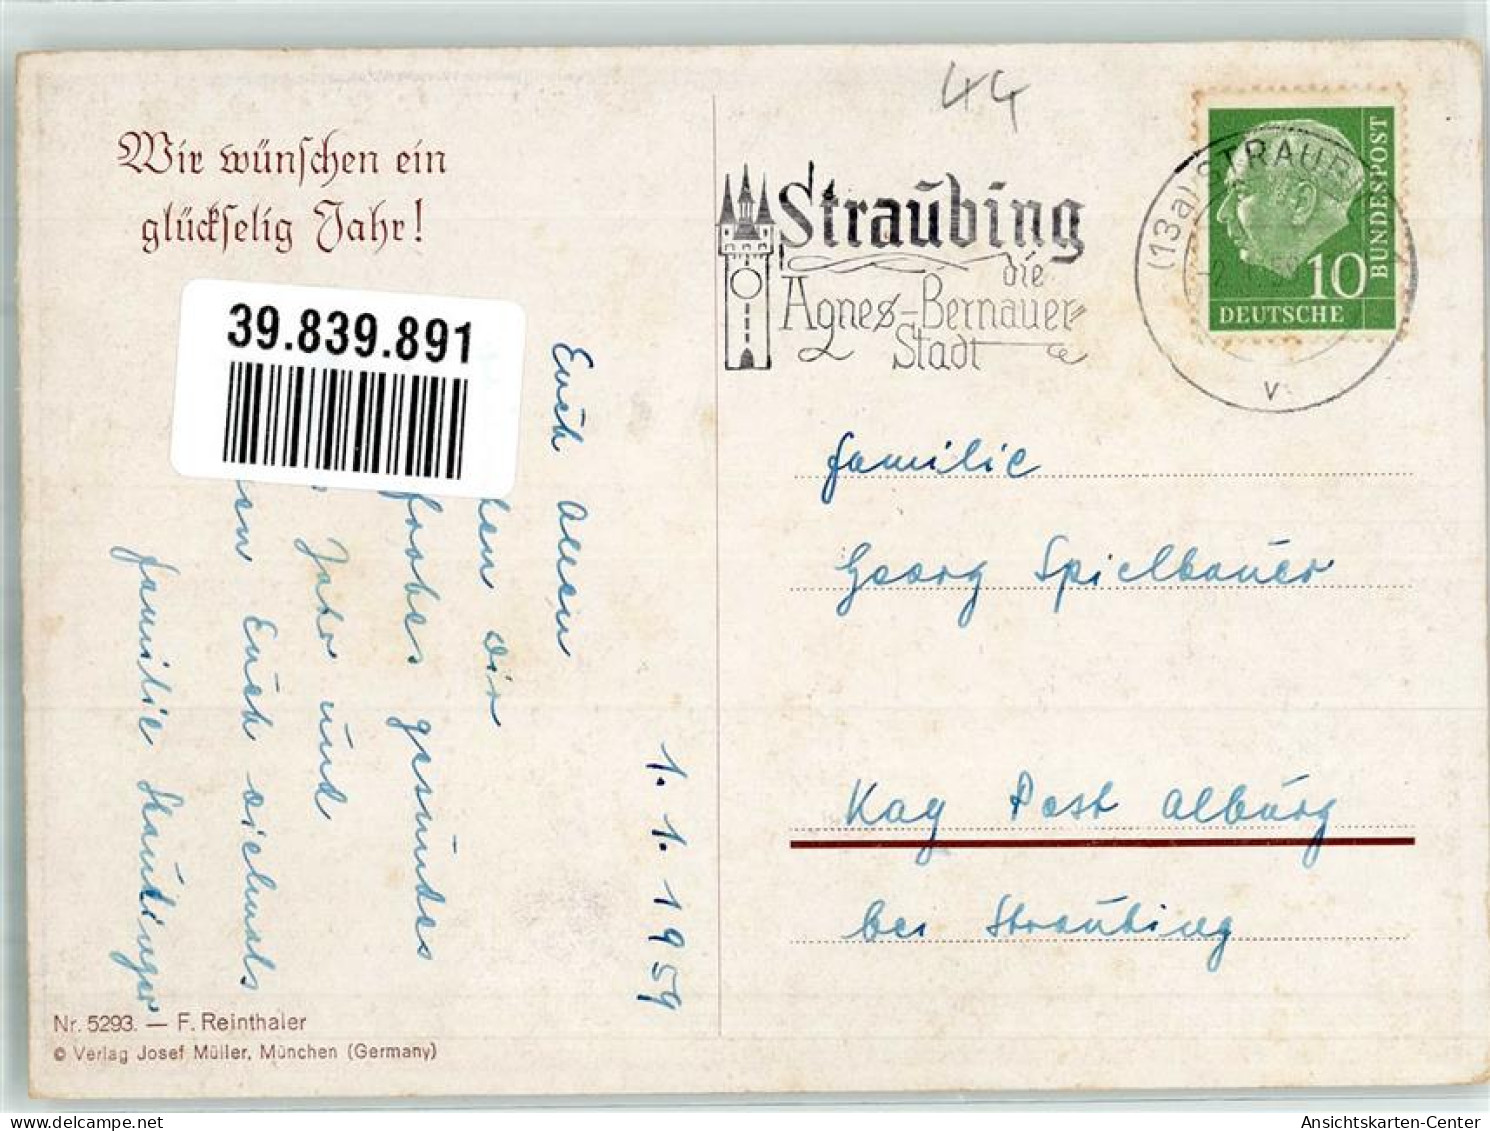 39839891 - Sign. Reinthaler F. Kinder Verlag Josef Mueller Nr. 5293 - New Year